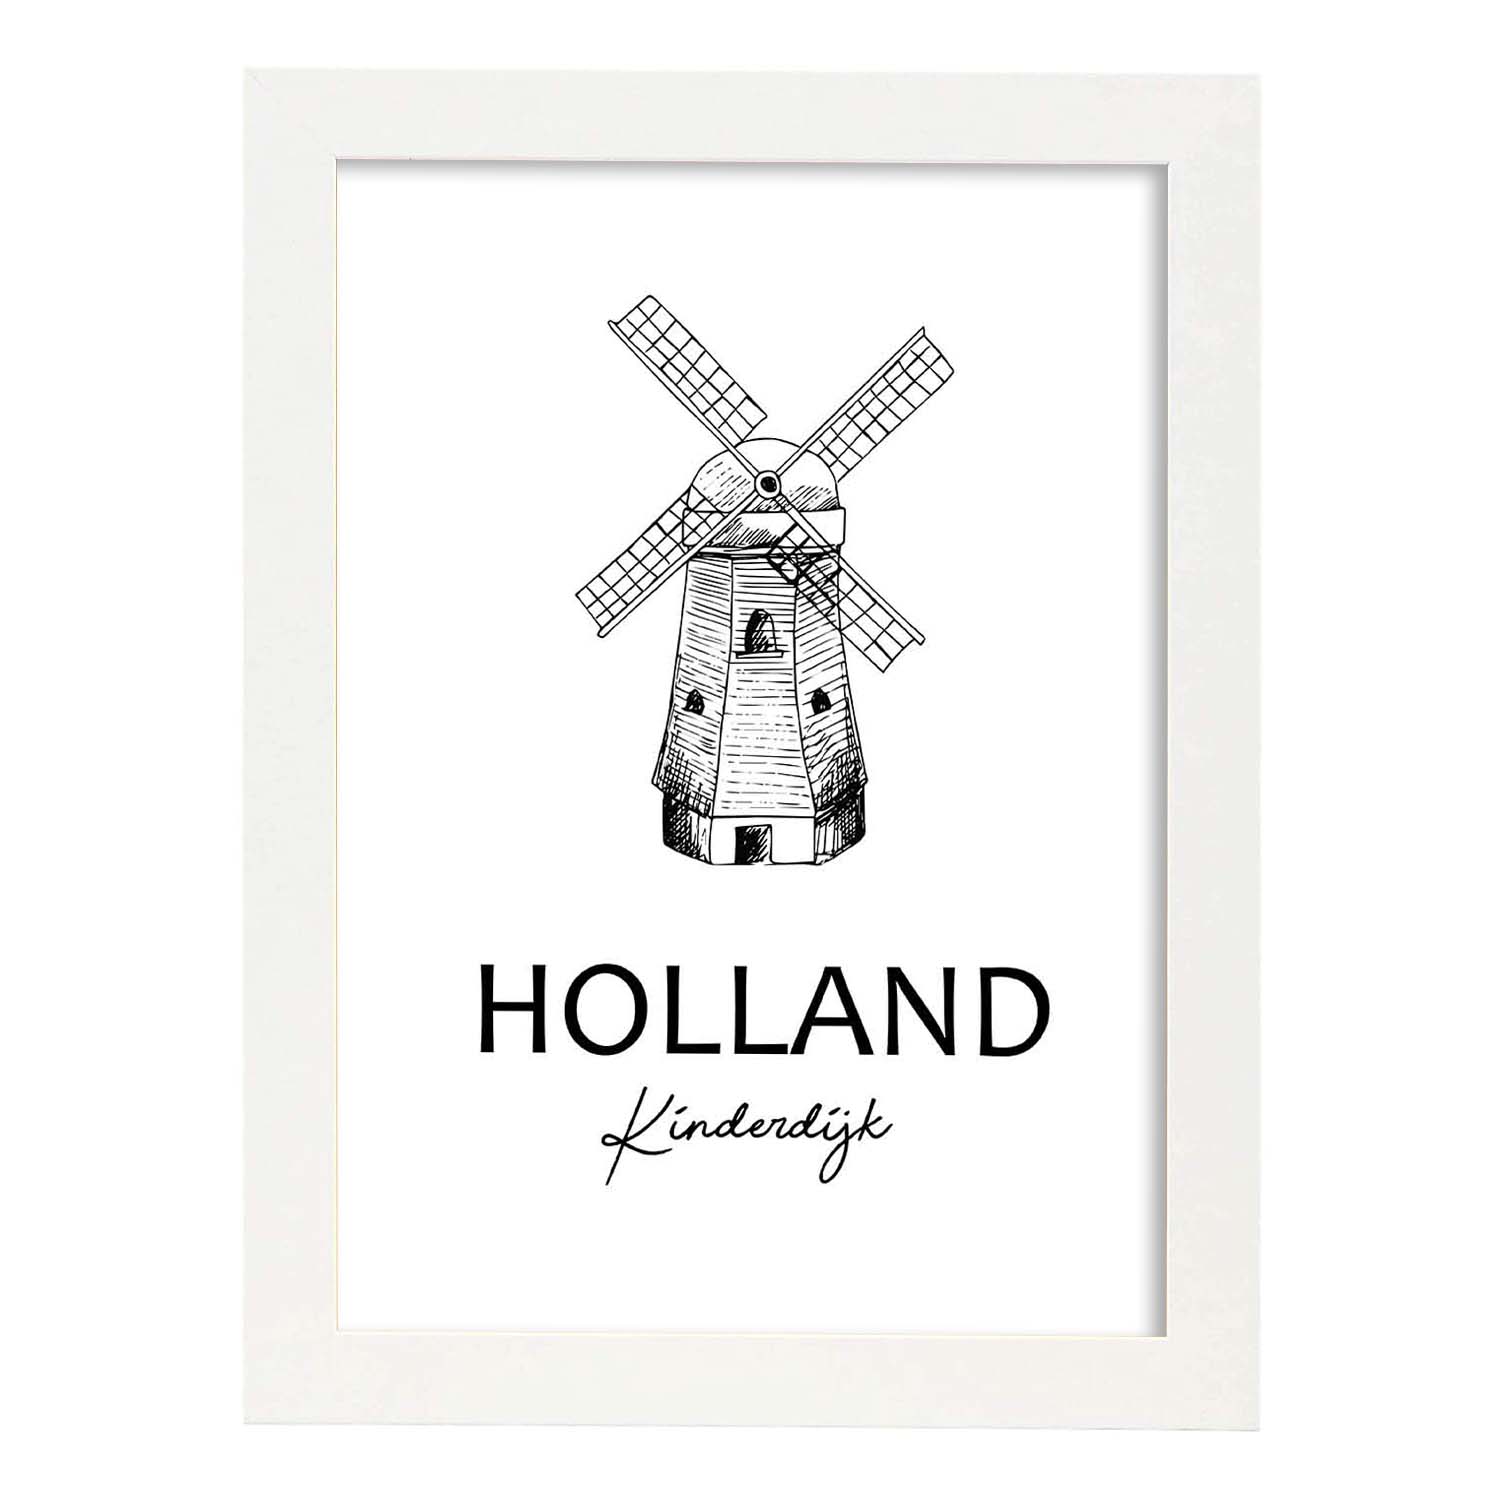 Poster de Holanda - Kinderdijk. Láminas con monumentos de ciudades.-Artwork-Nacnic-A3-Marco Blanco-Nacnic Estudio SL